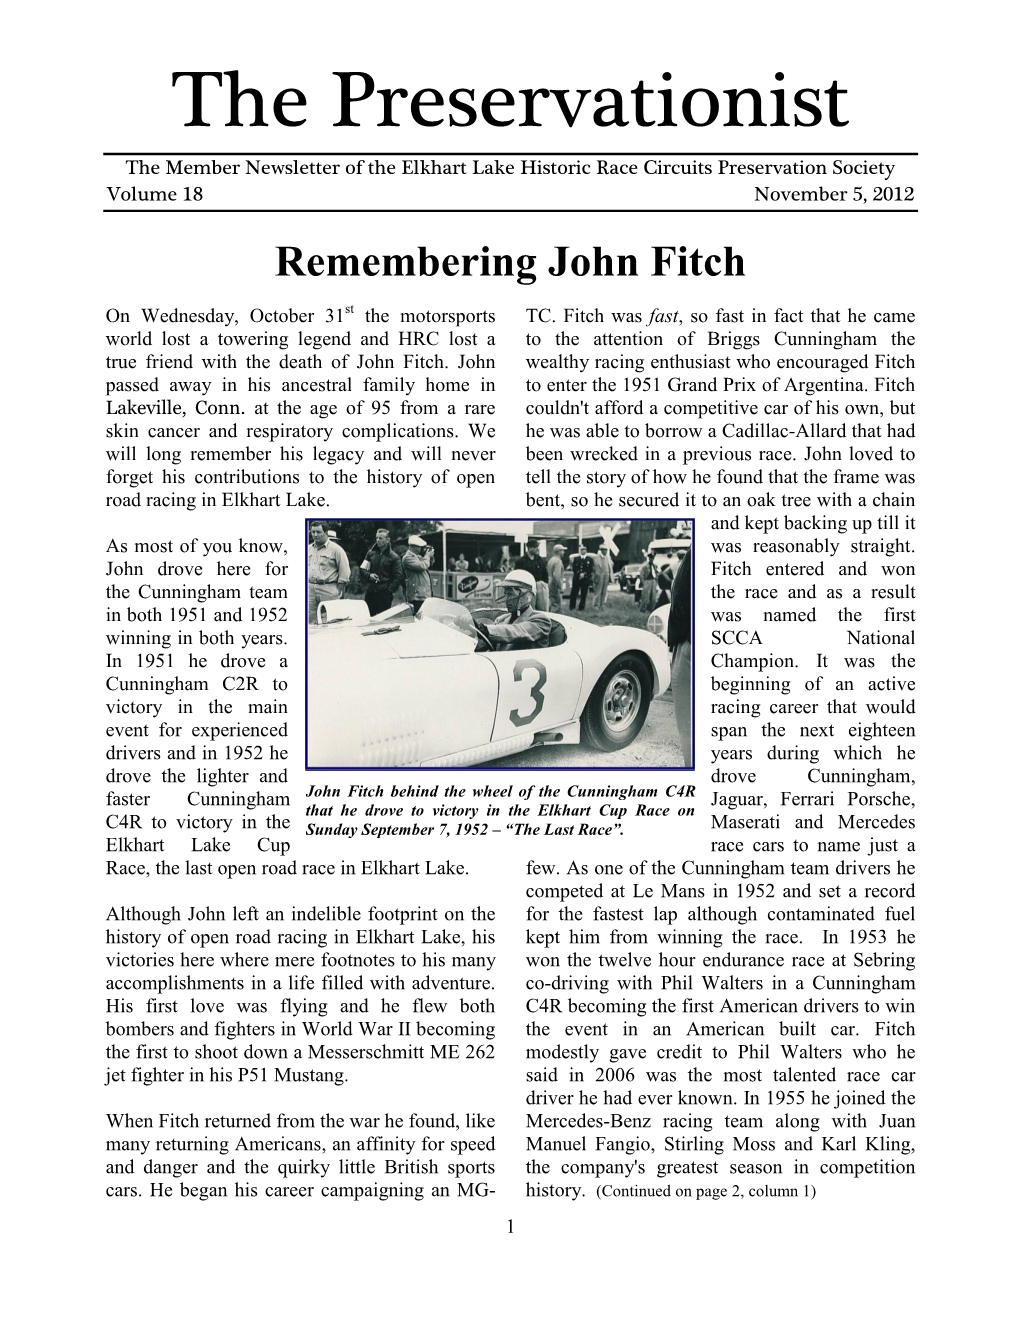 The Preservationist the Member Newsletter of the Elkhart Lake Historic Race Circuits Preservation Society Volume 18 November 5, 2012